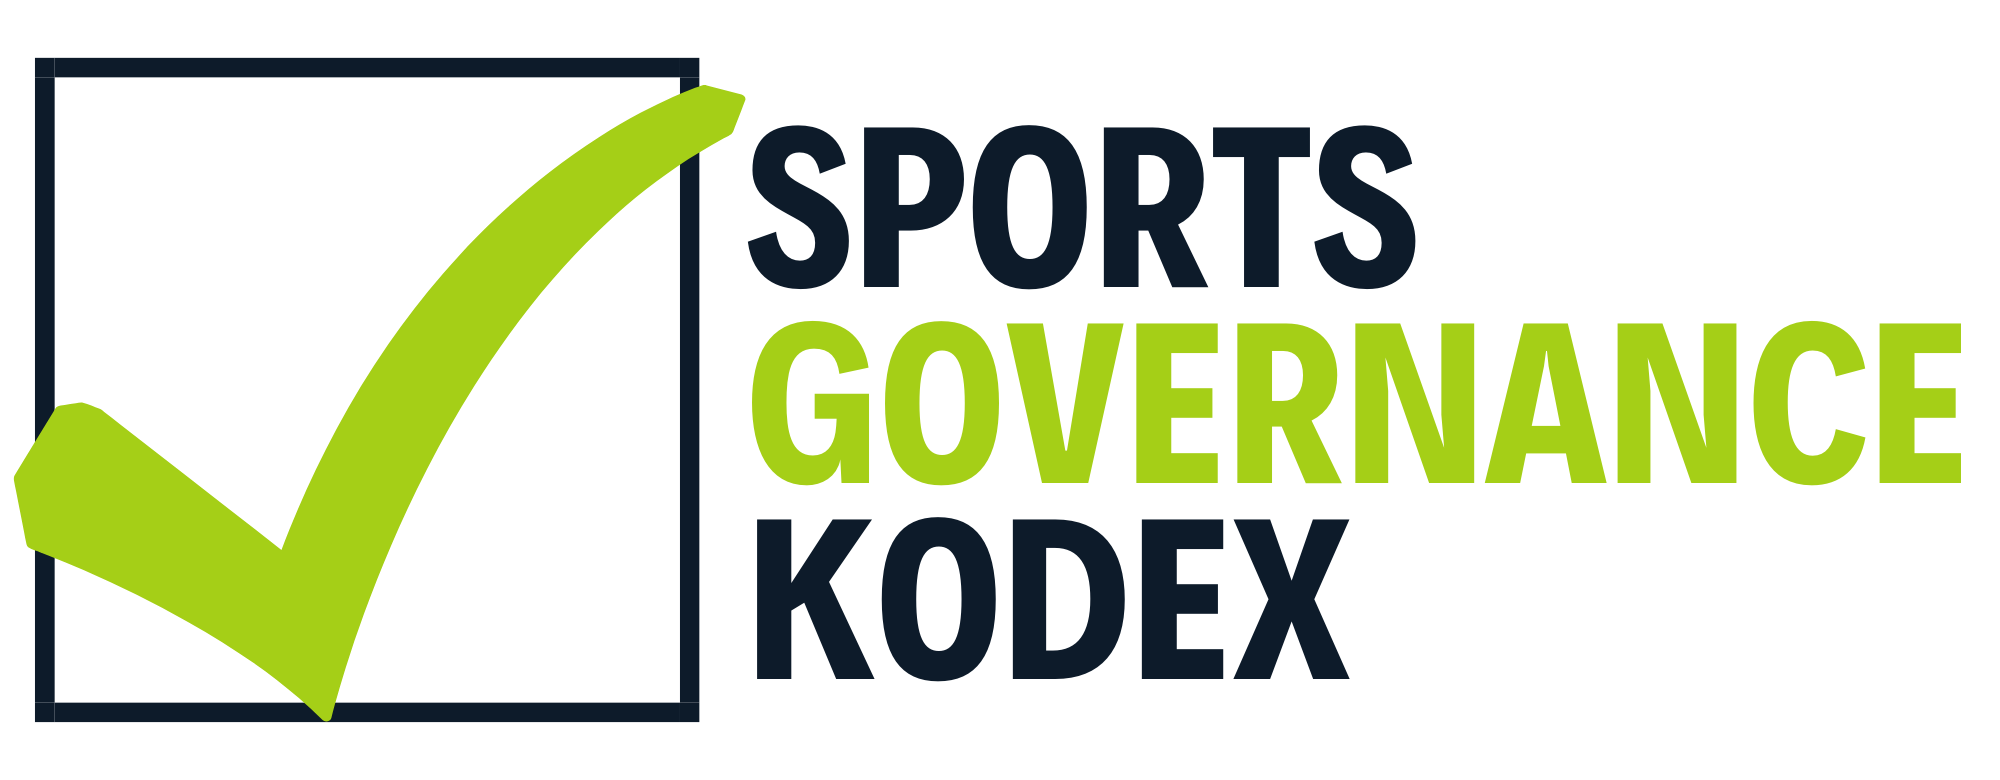 KODEX Sports Governance